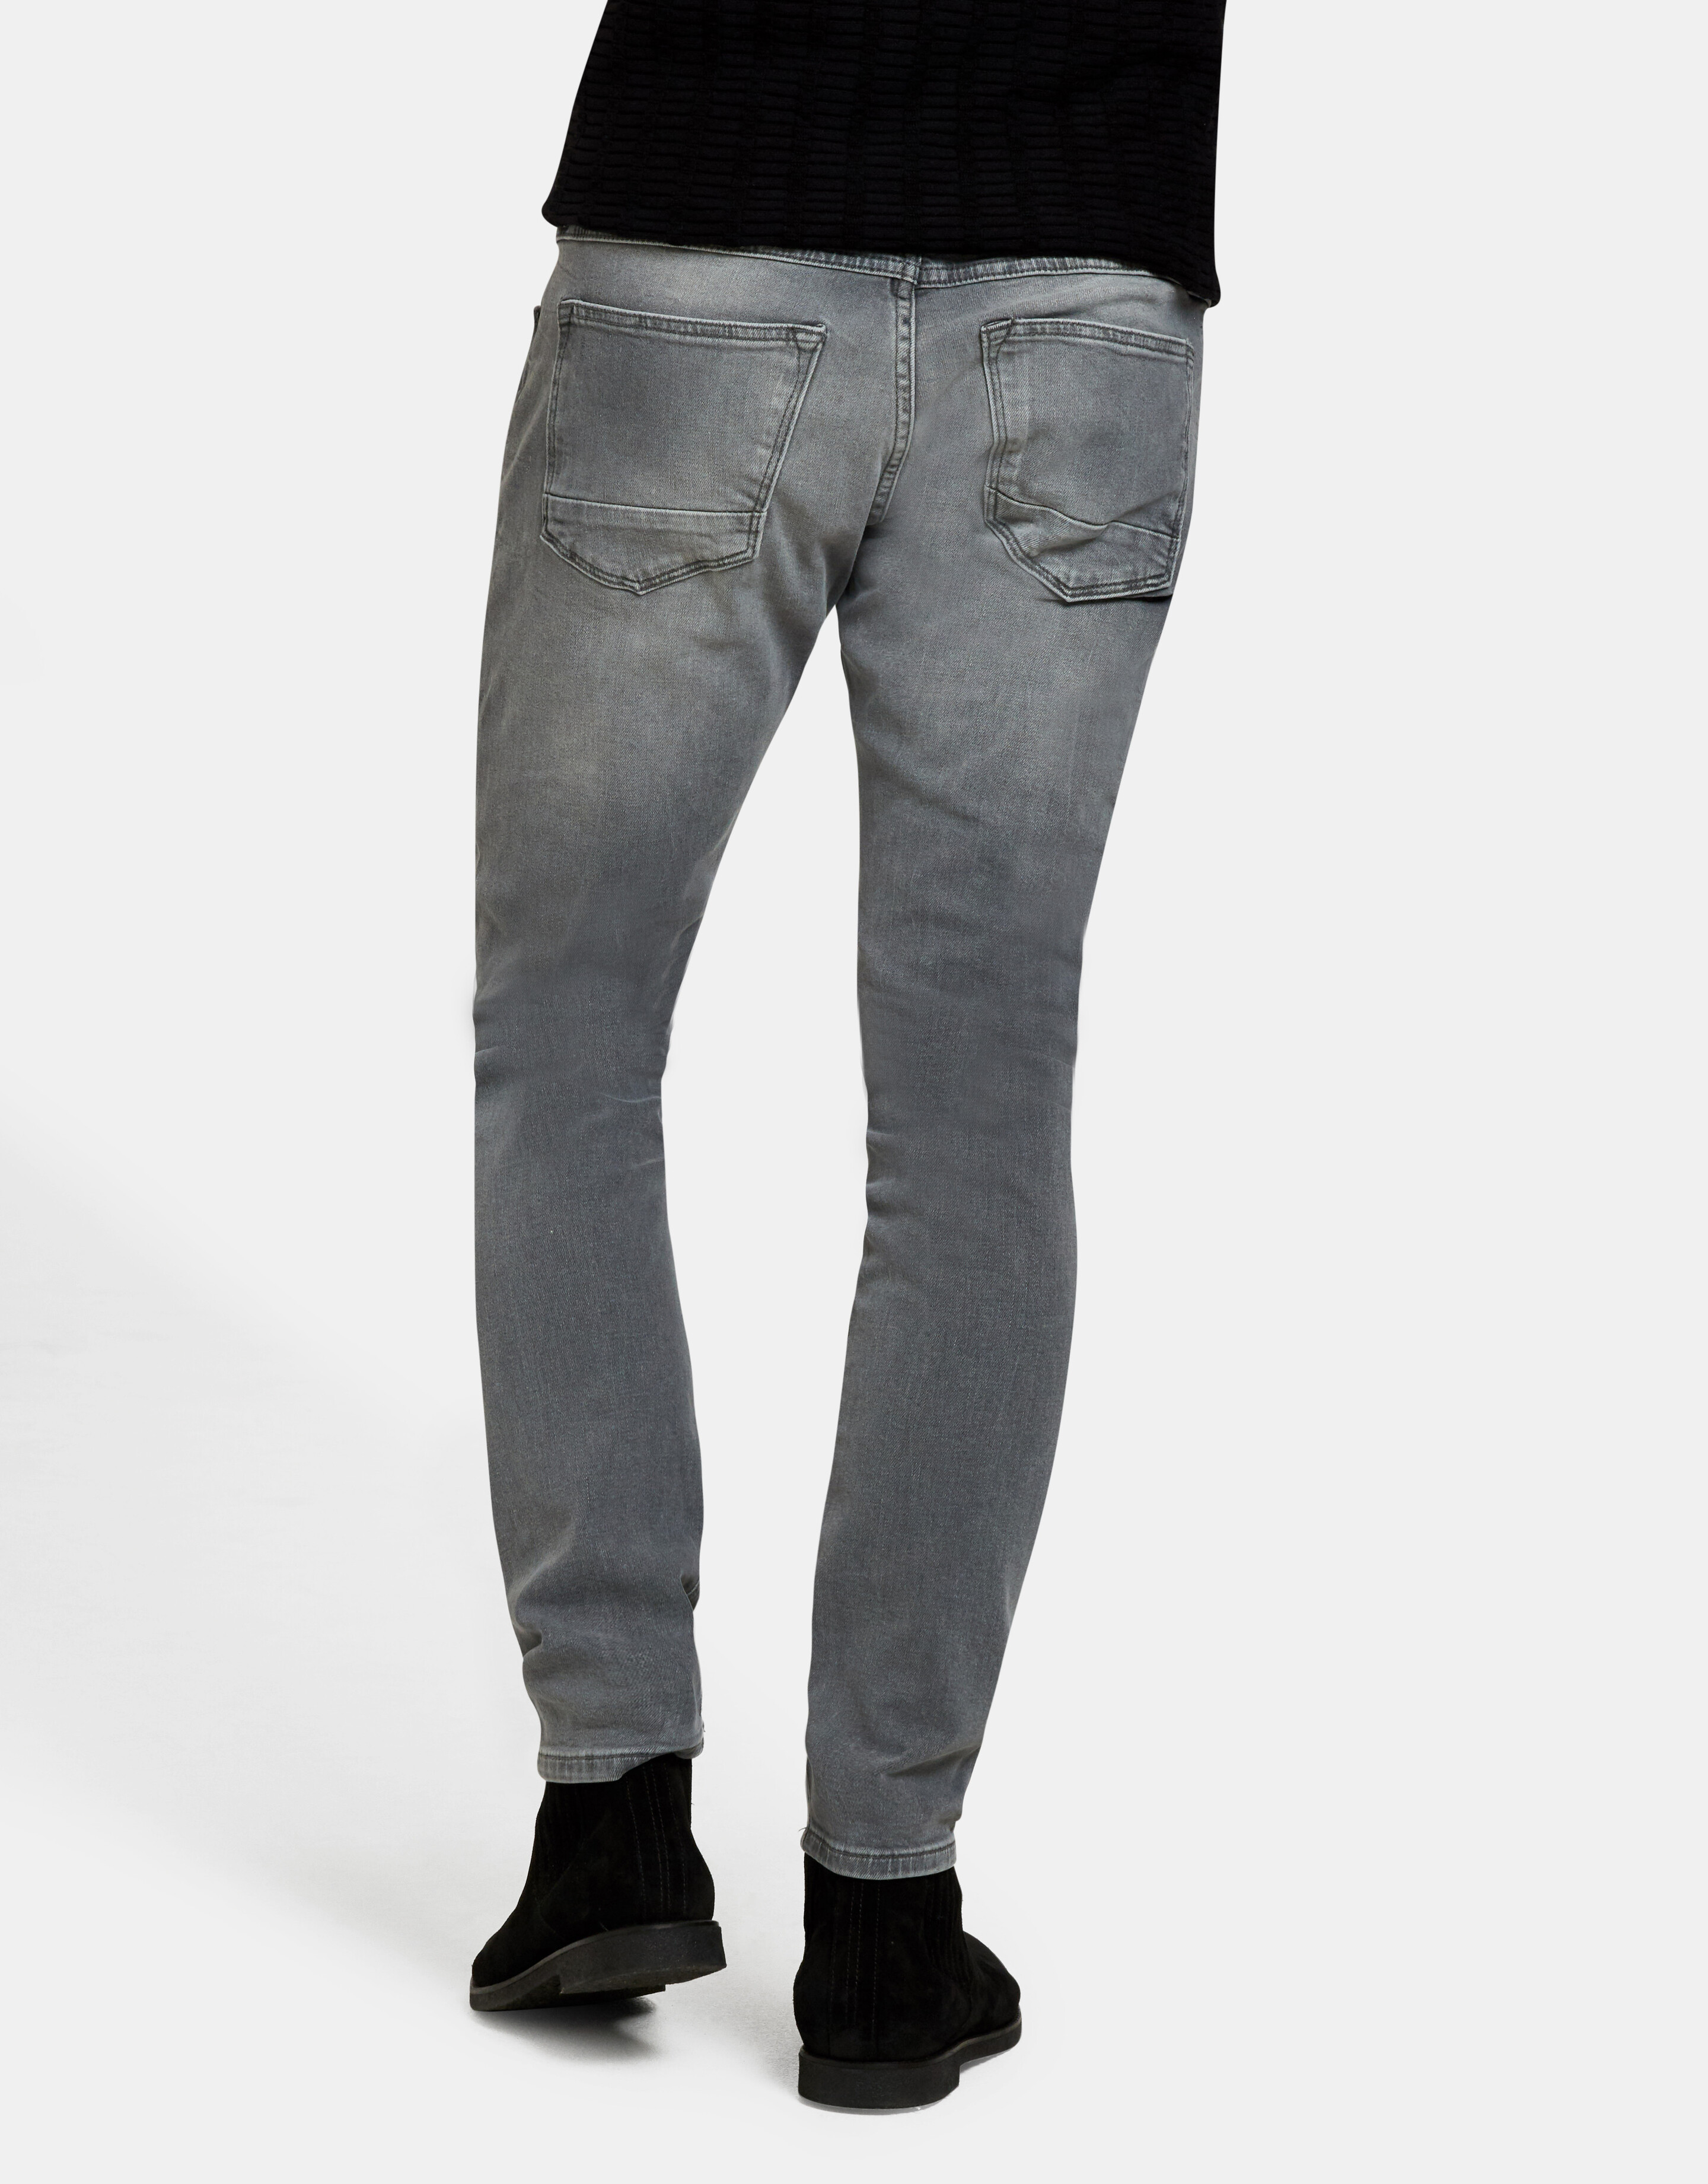 Leroy Skinny Grey Jeans L32 Refill